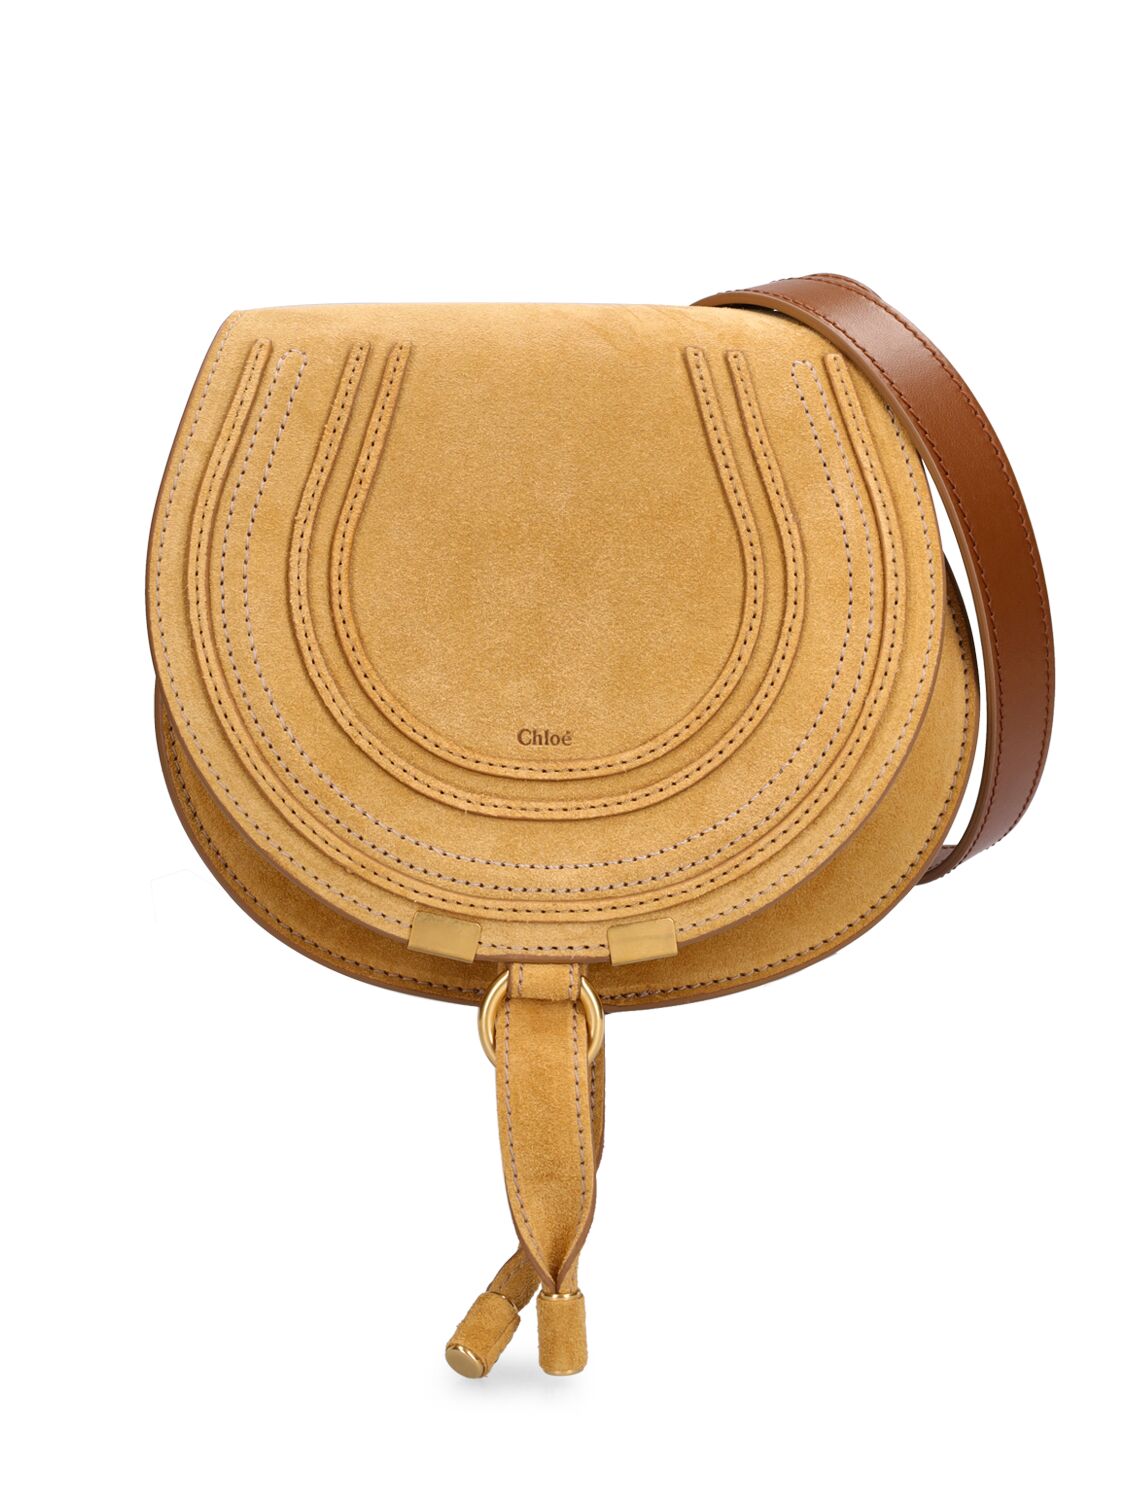 Chloé Mini Marcie Suede Shoulder Bag In Safari Gold